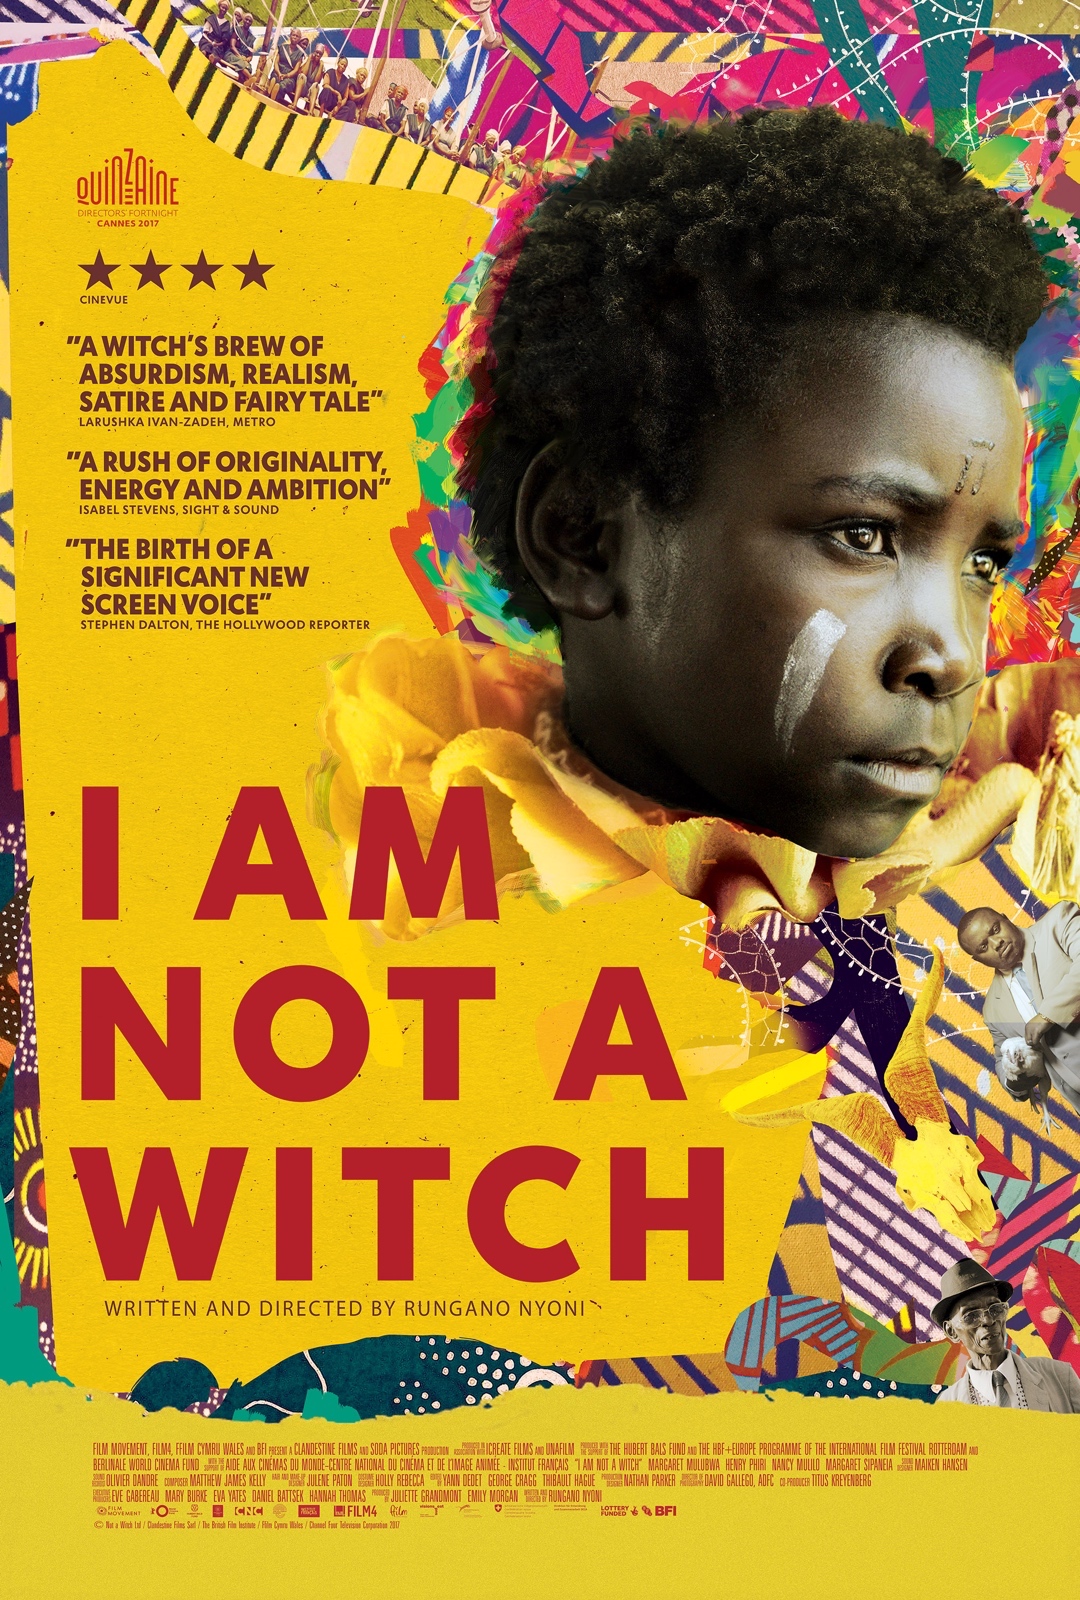 Nonton film I Am Not a Witch layarkaca21 indoxx1 ganool online streaming terbaru